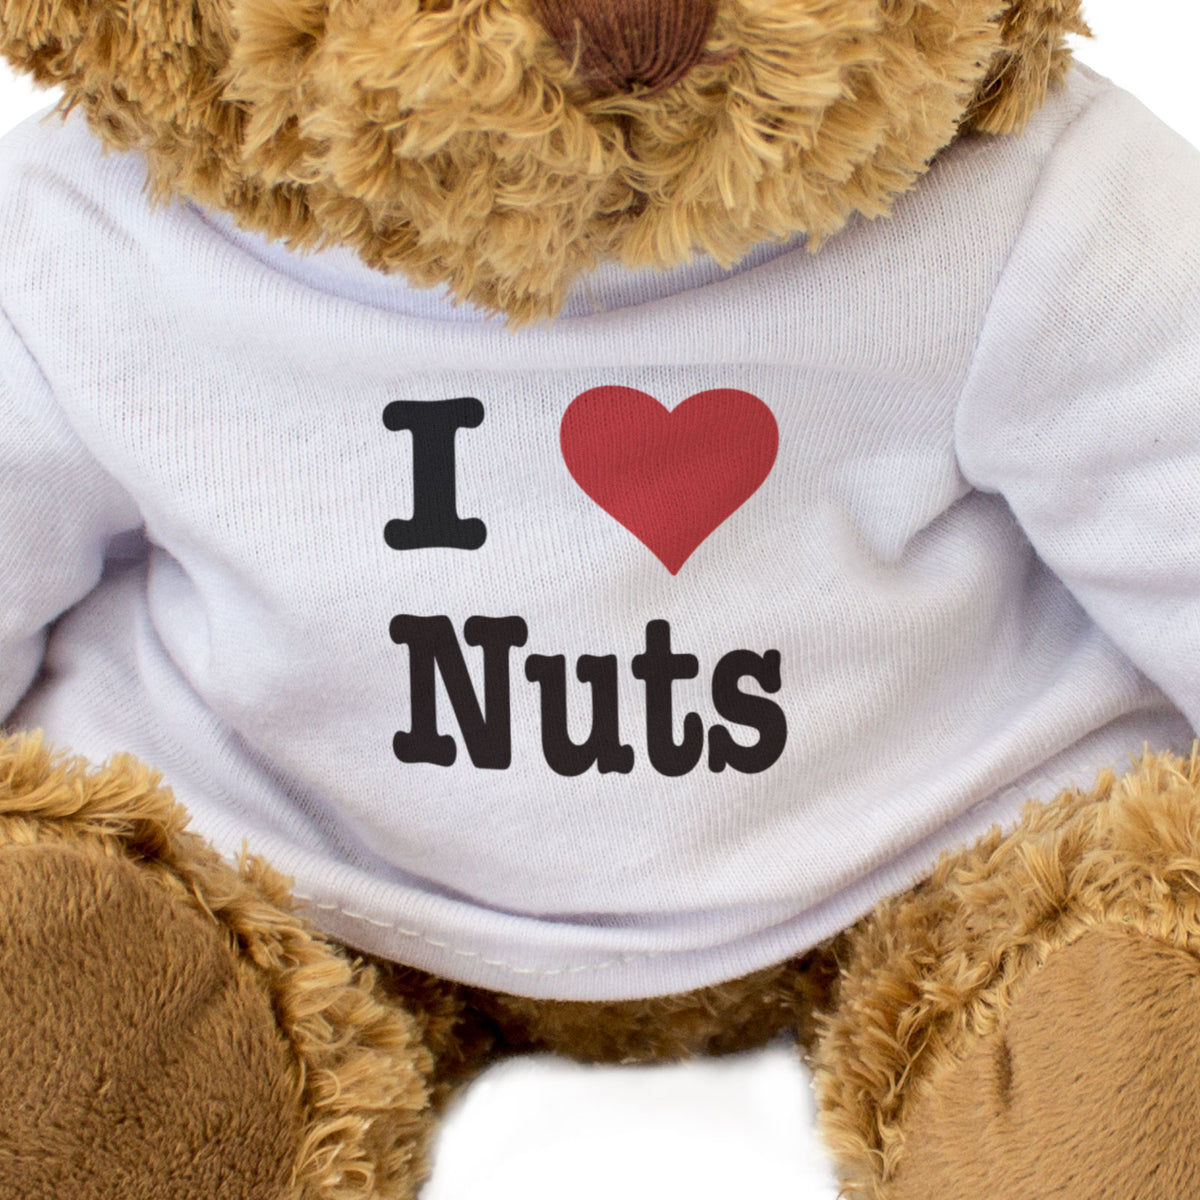 I Love Nuts - Teddy Bear